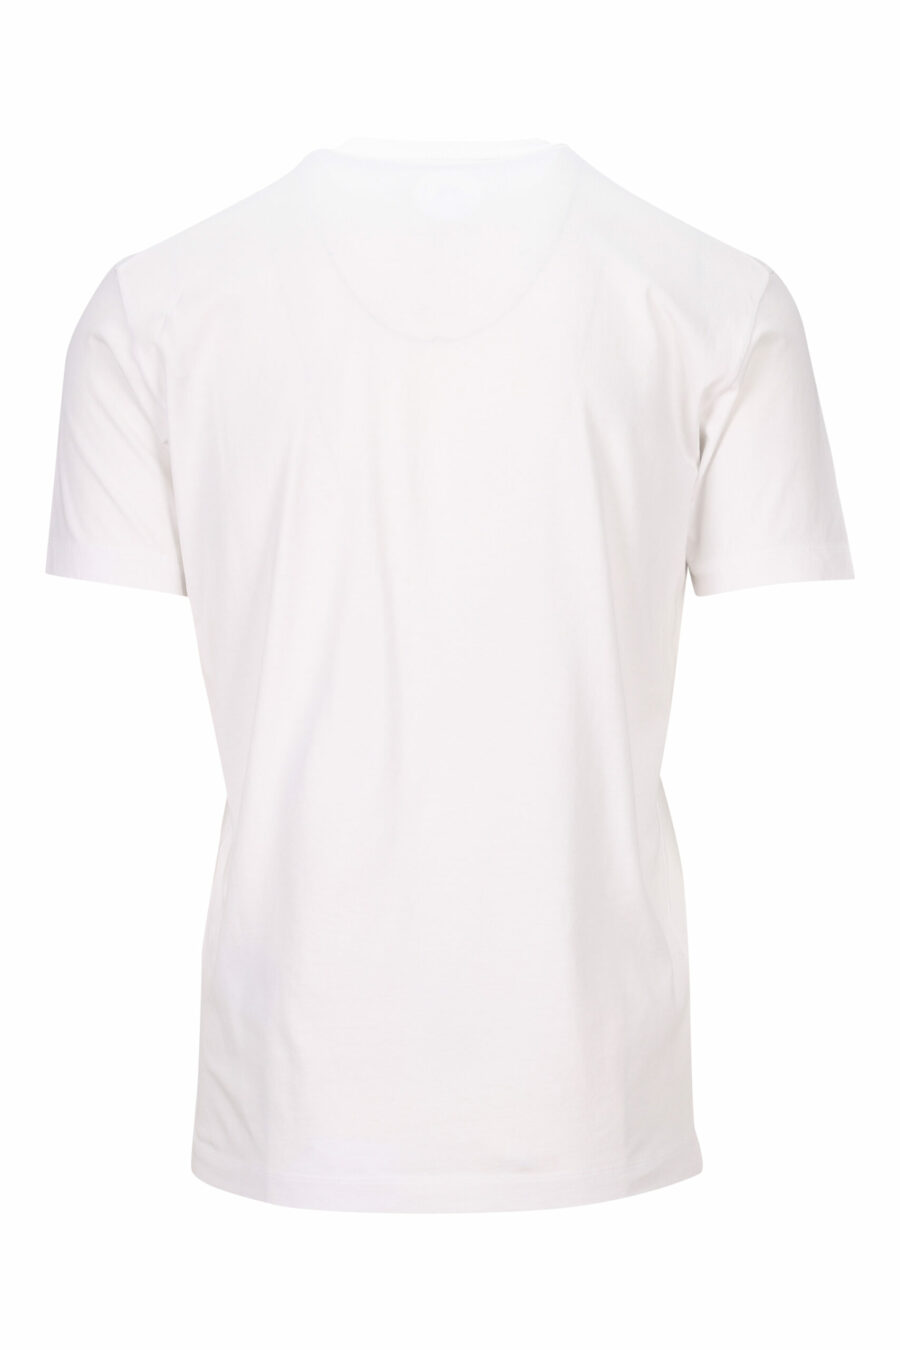 T-shirt branca com mini-logotipo "suburbans" preto - 8054148512842 1 scaled